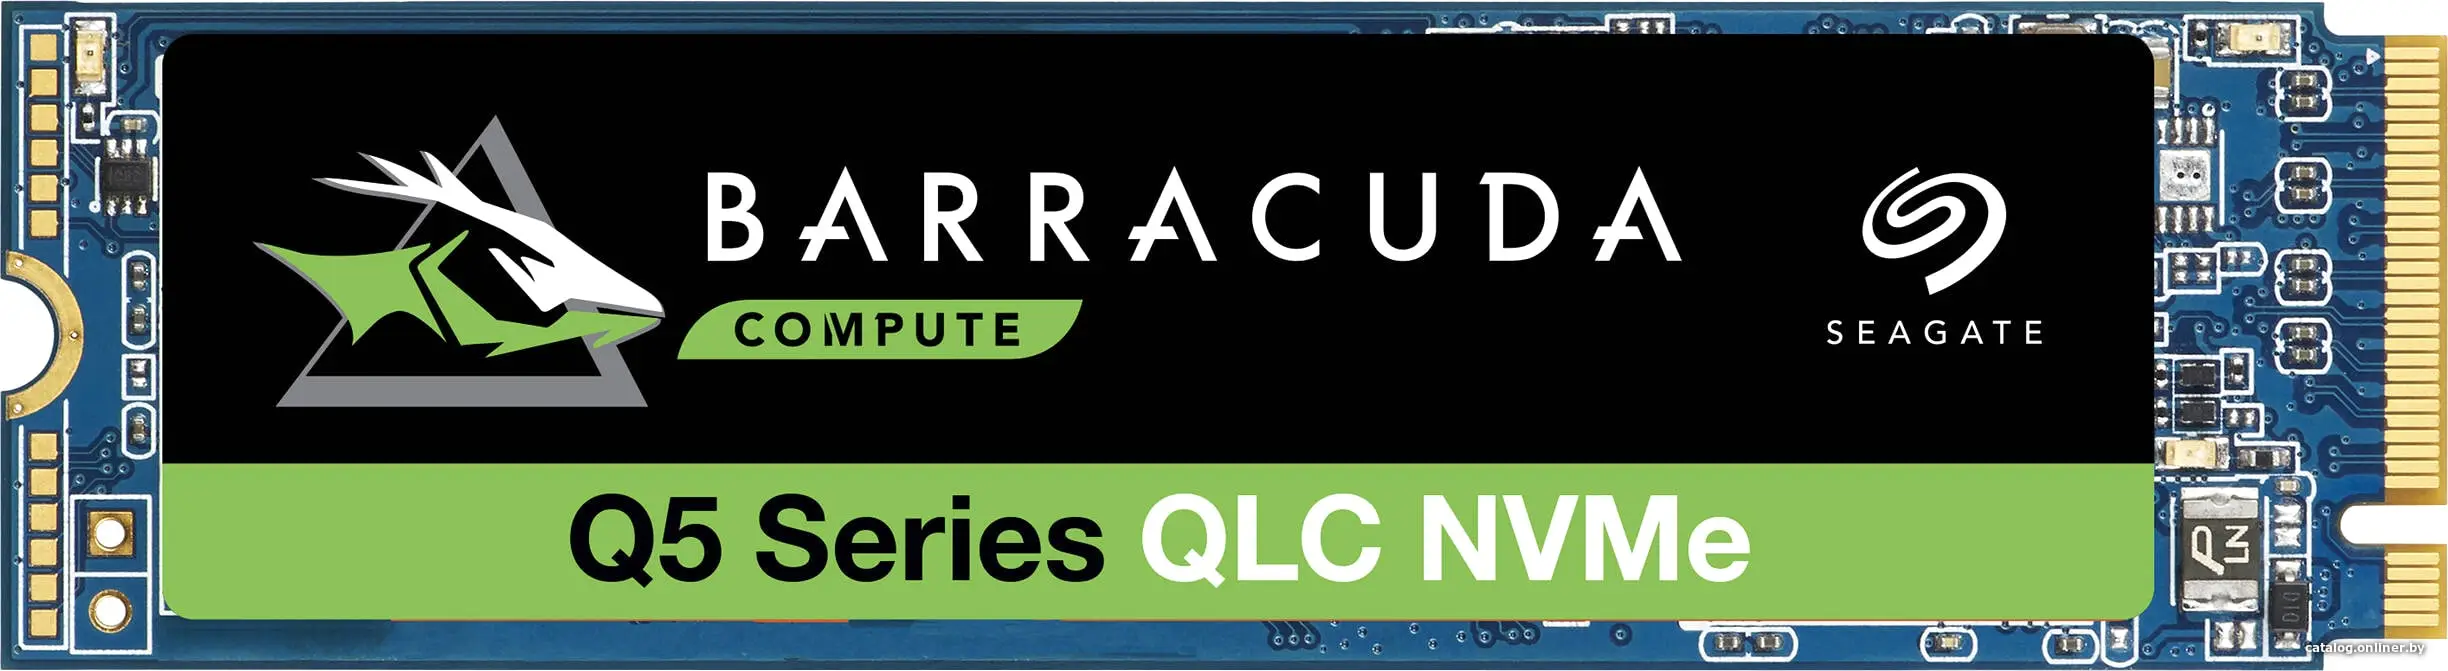 Купить Seagate® BarraCuda™ Q5, 1TB SSD, M.2 2280-S2 PCIe 3.0 NVMe, Read/Write: 2,400 / 1,700 MB/s, EAN: 8719706027724, цена, опт и розница